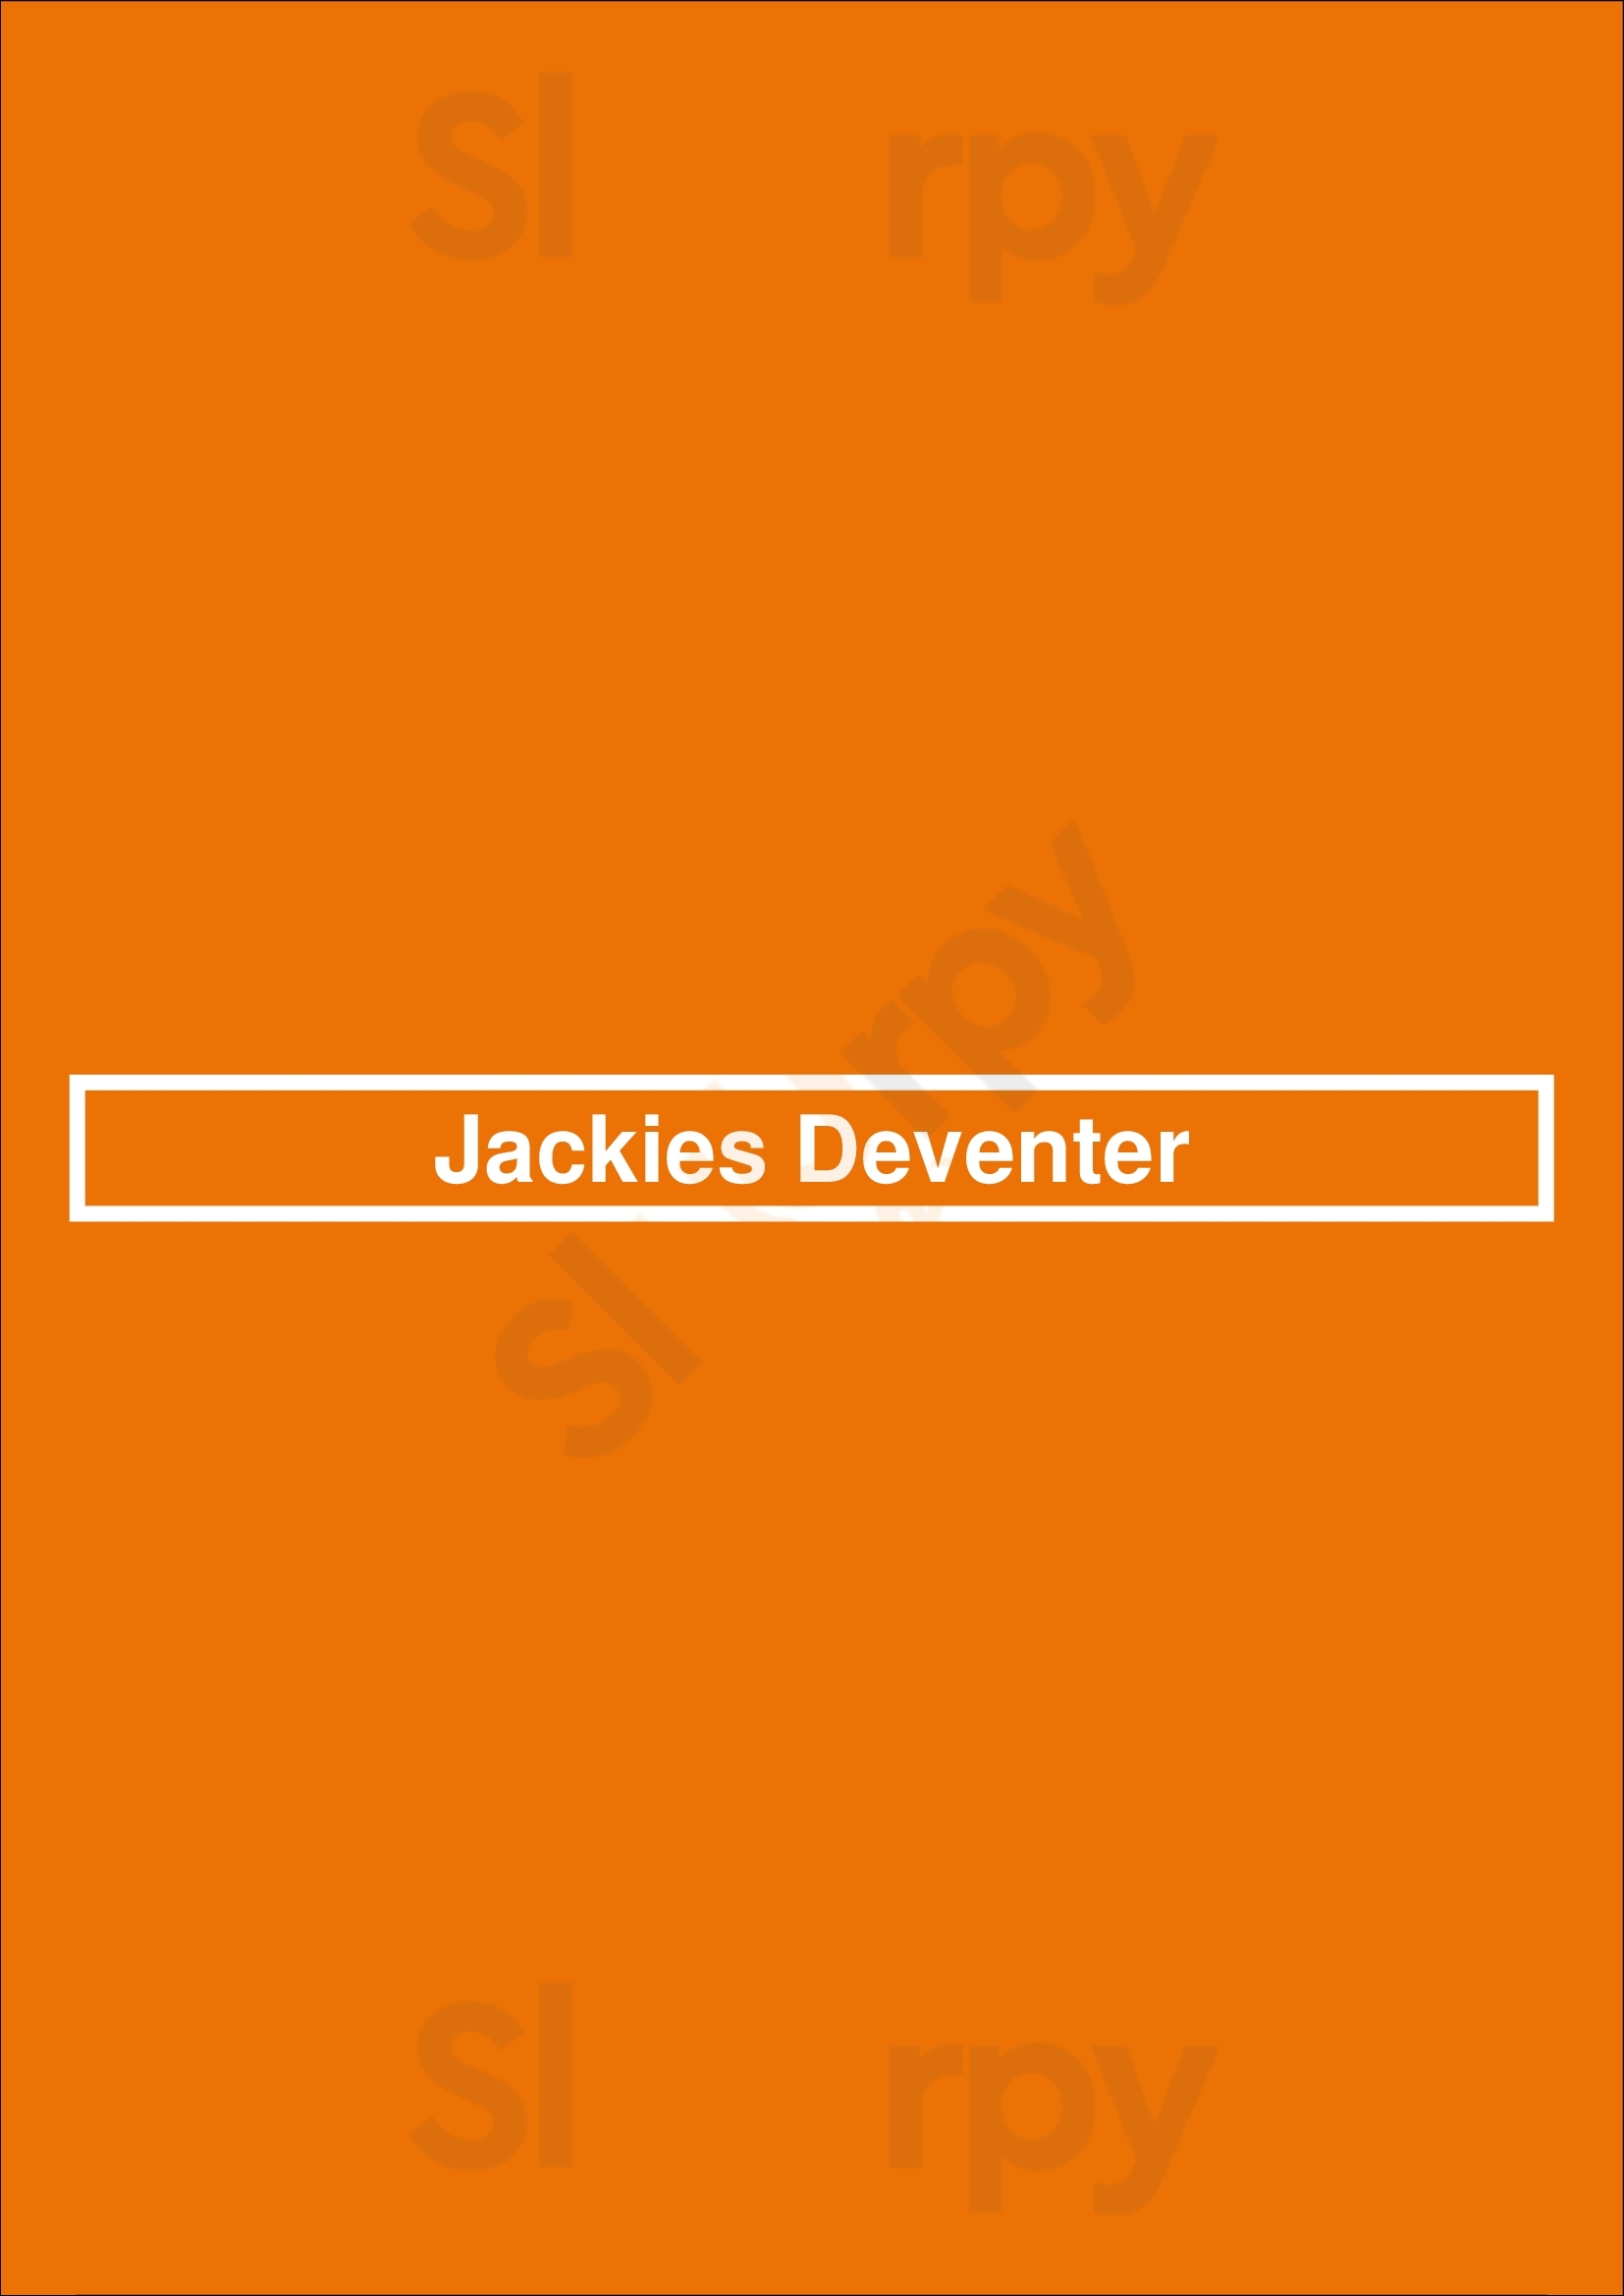 Jackies Deventer Deventer Menu - 1